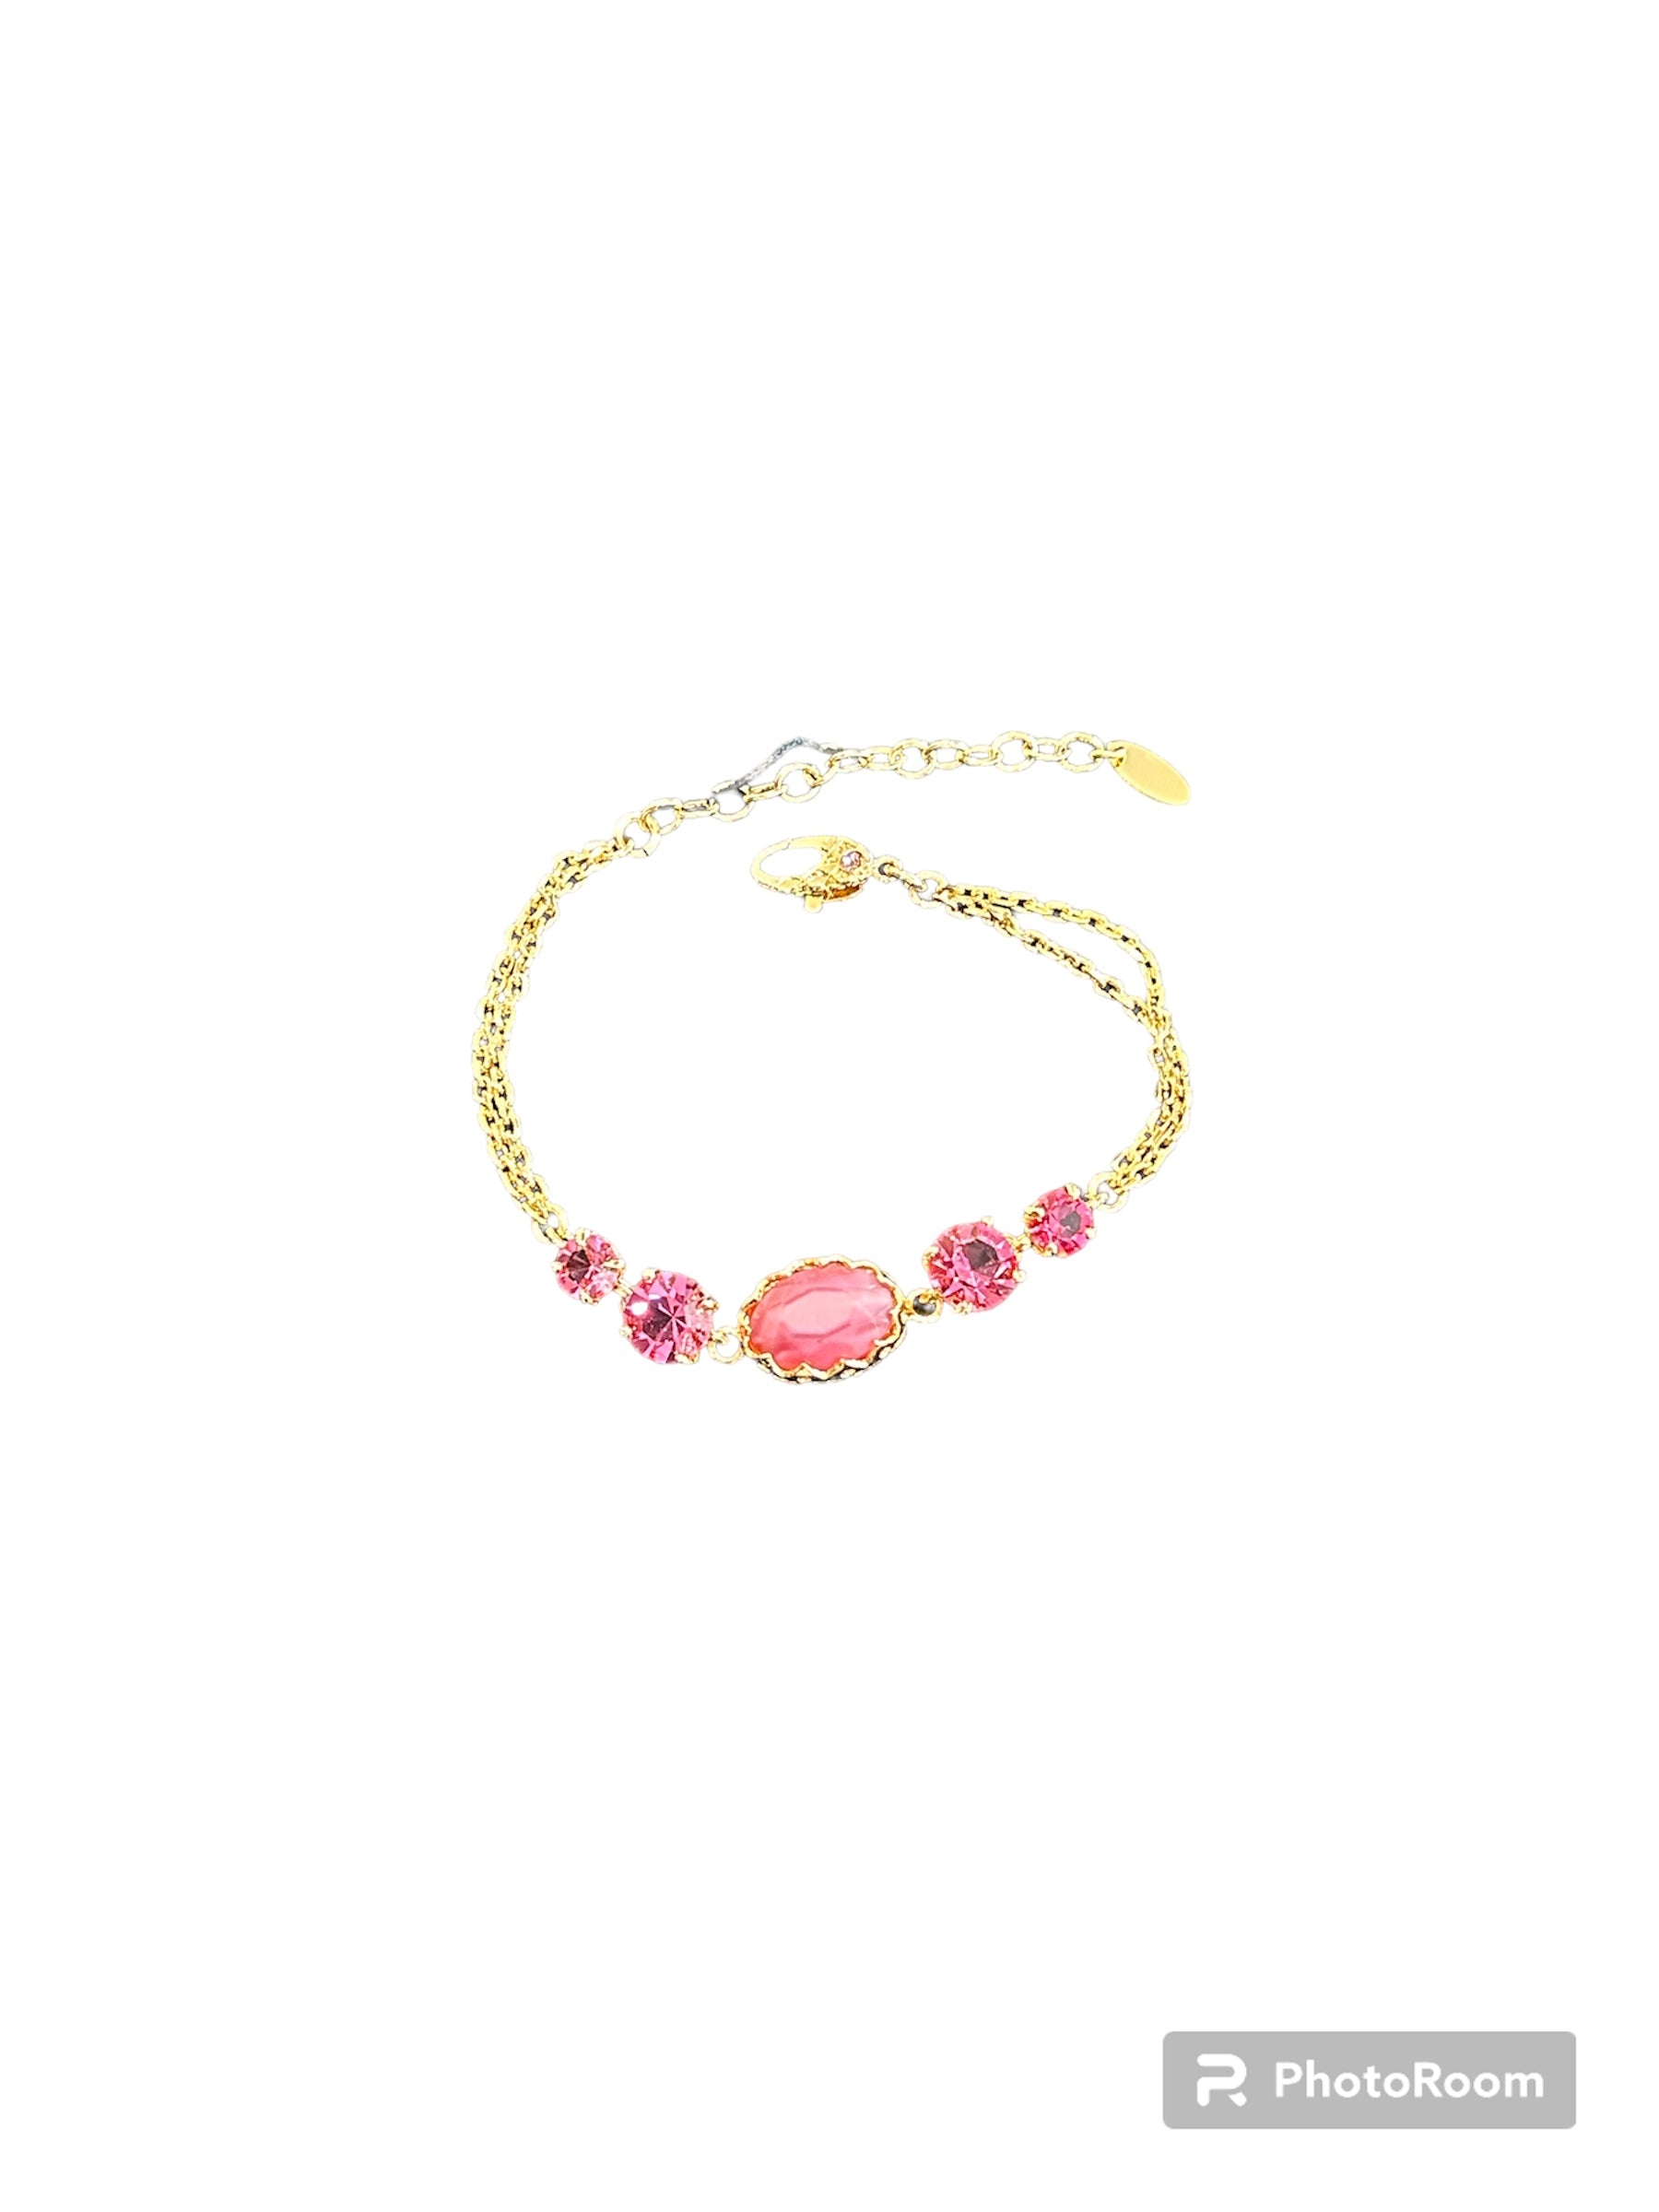 IL Mio Re - Gilt bronze bracelet with pink stones - ILMIORE BR 045